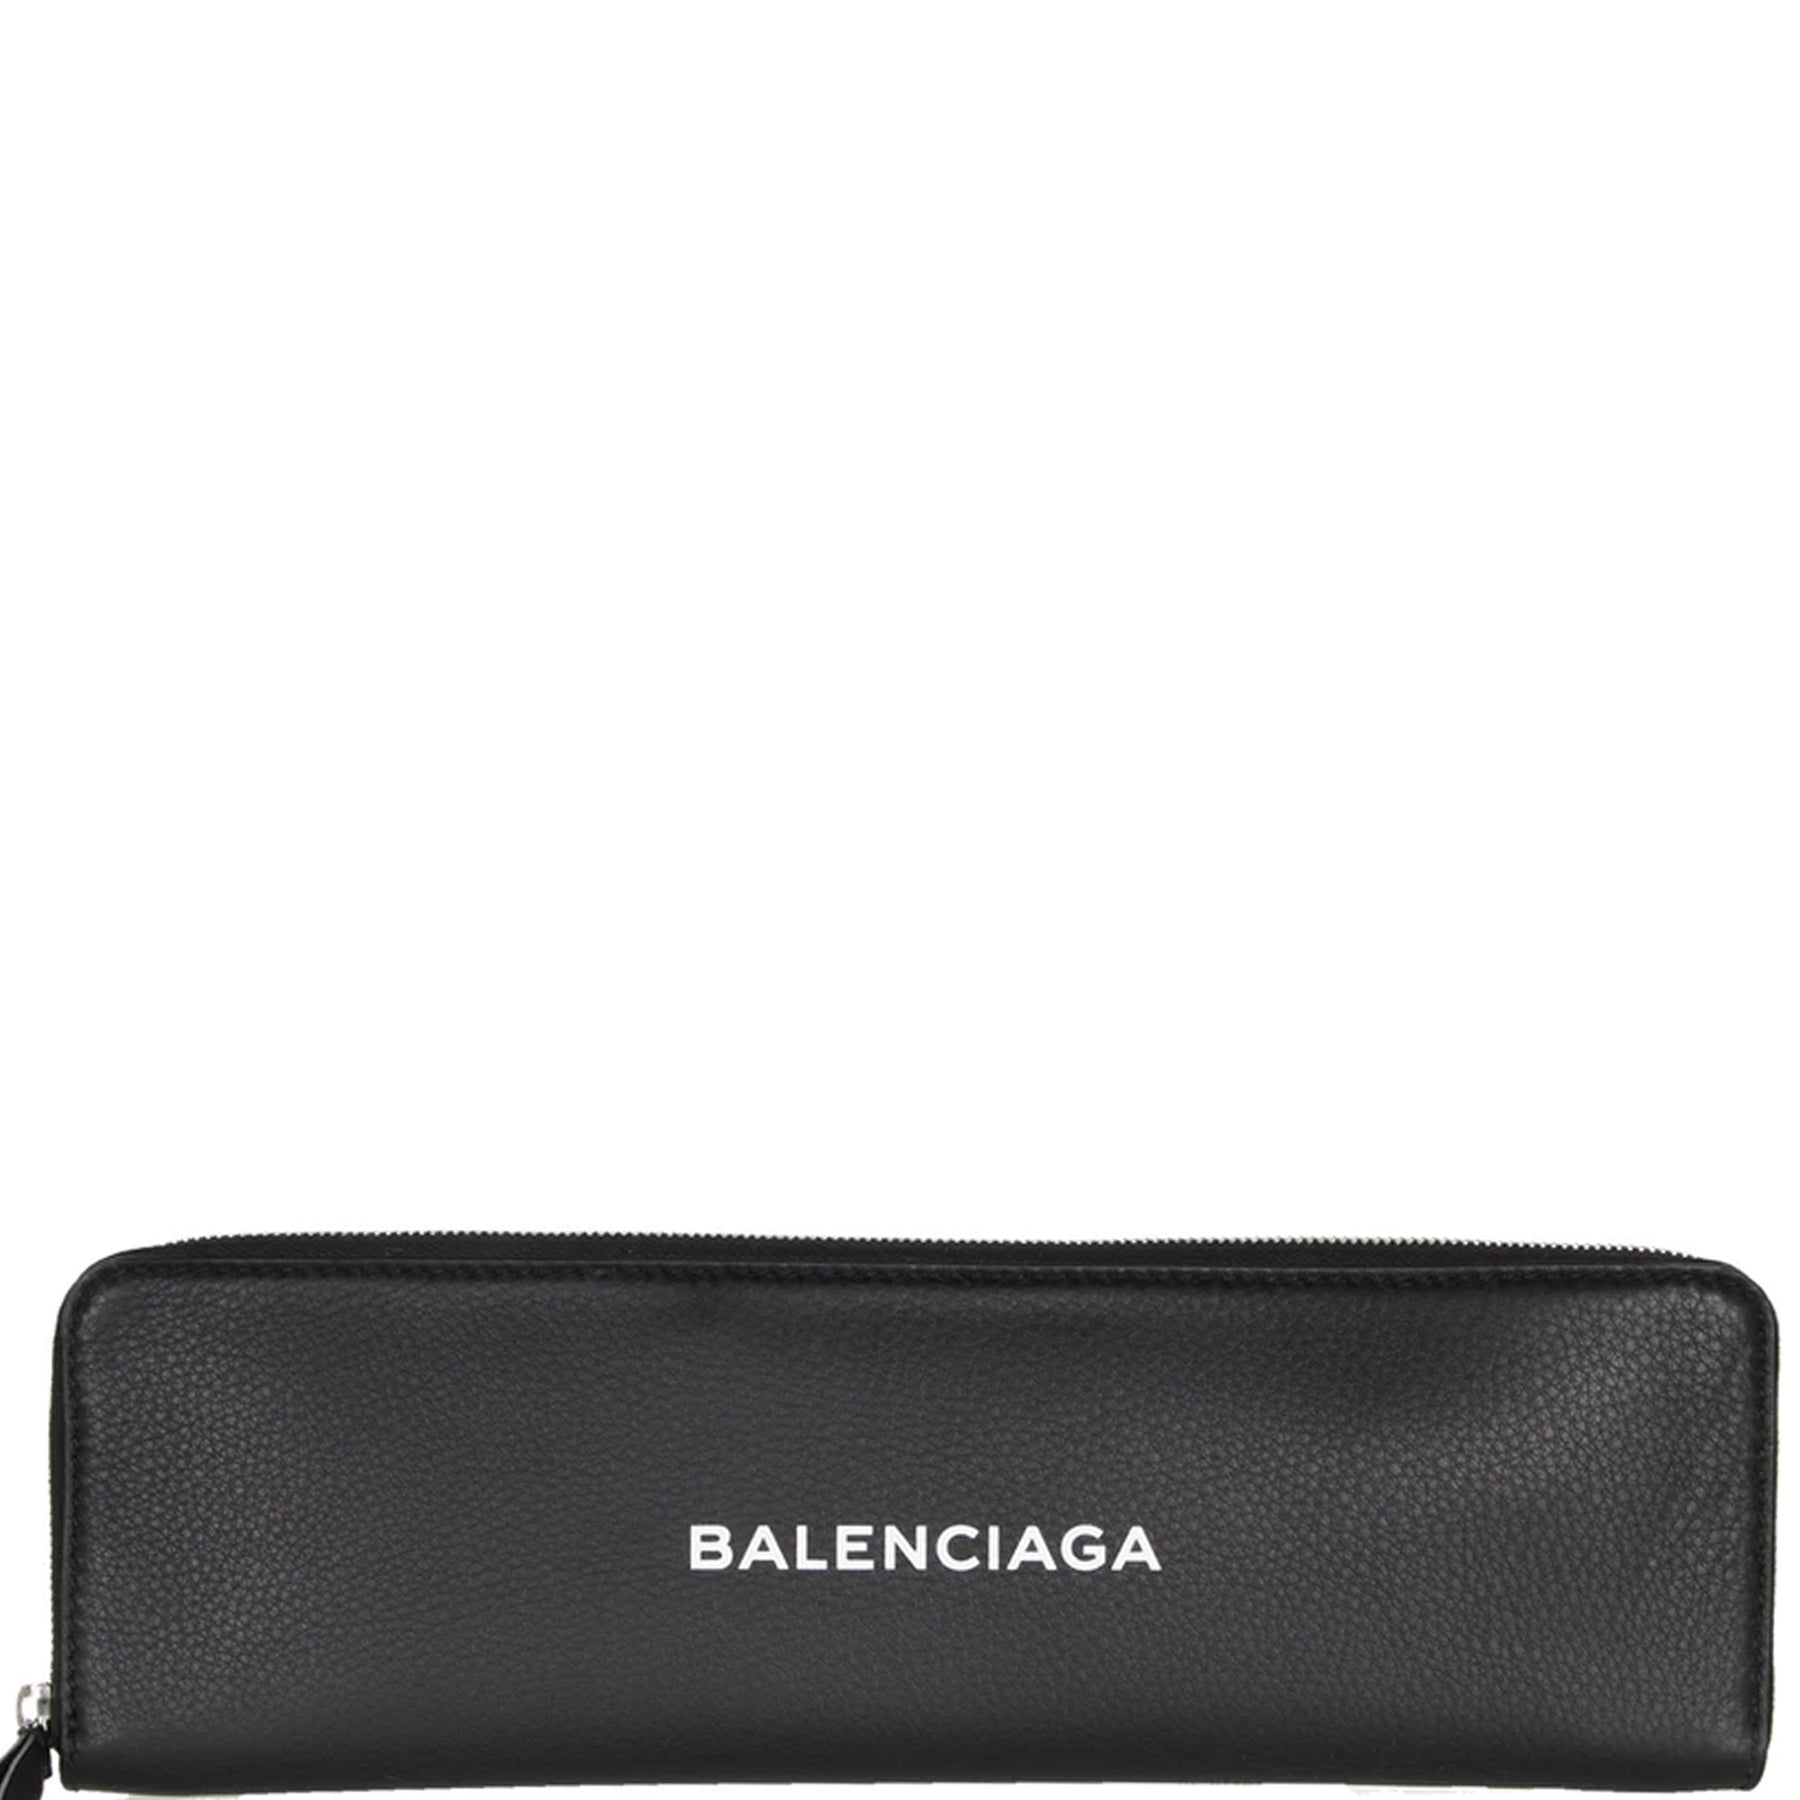 City leather clutch bag Balenciaga Black in Leather  28902574